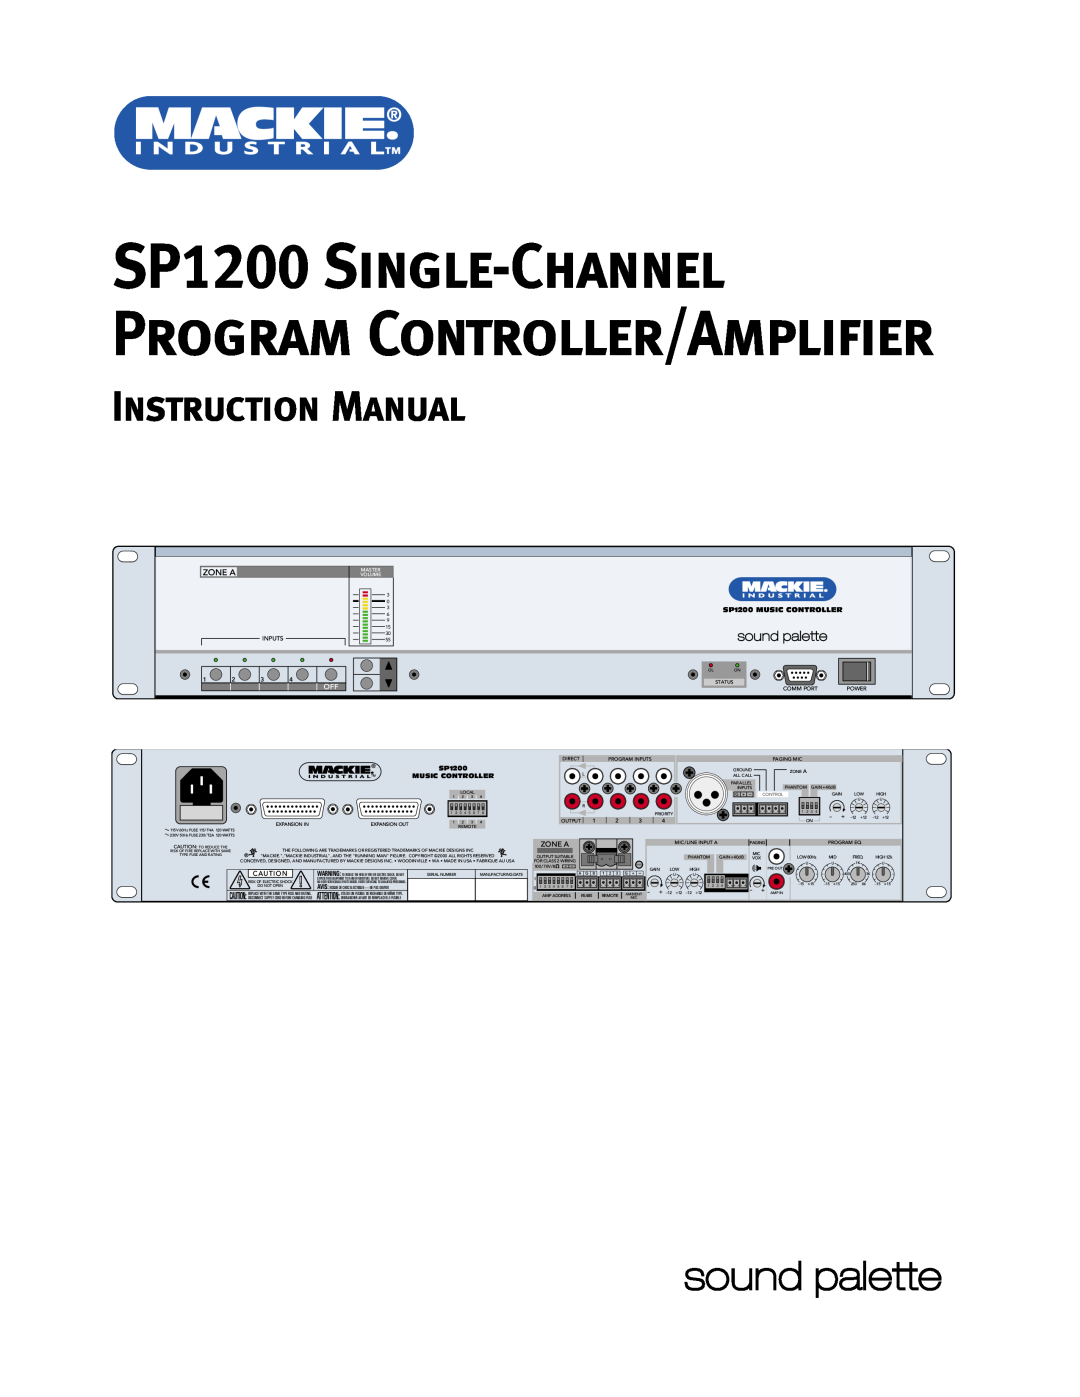 Mackie user service SP1200 Single-ChannelProgram Controller/Amplifier, Zone A, SP1200 MUSIC CONTROLLER, Master Volume 